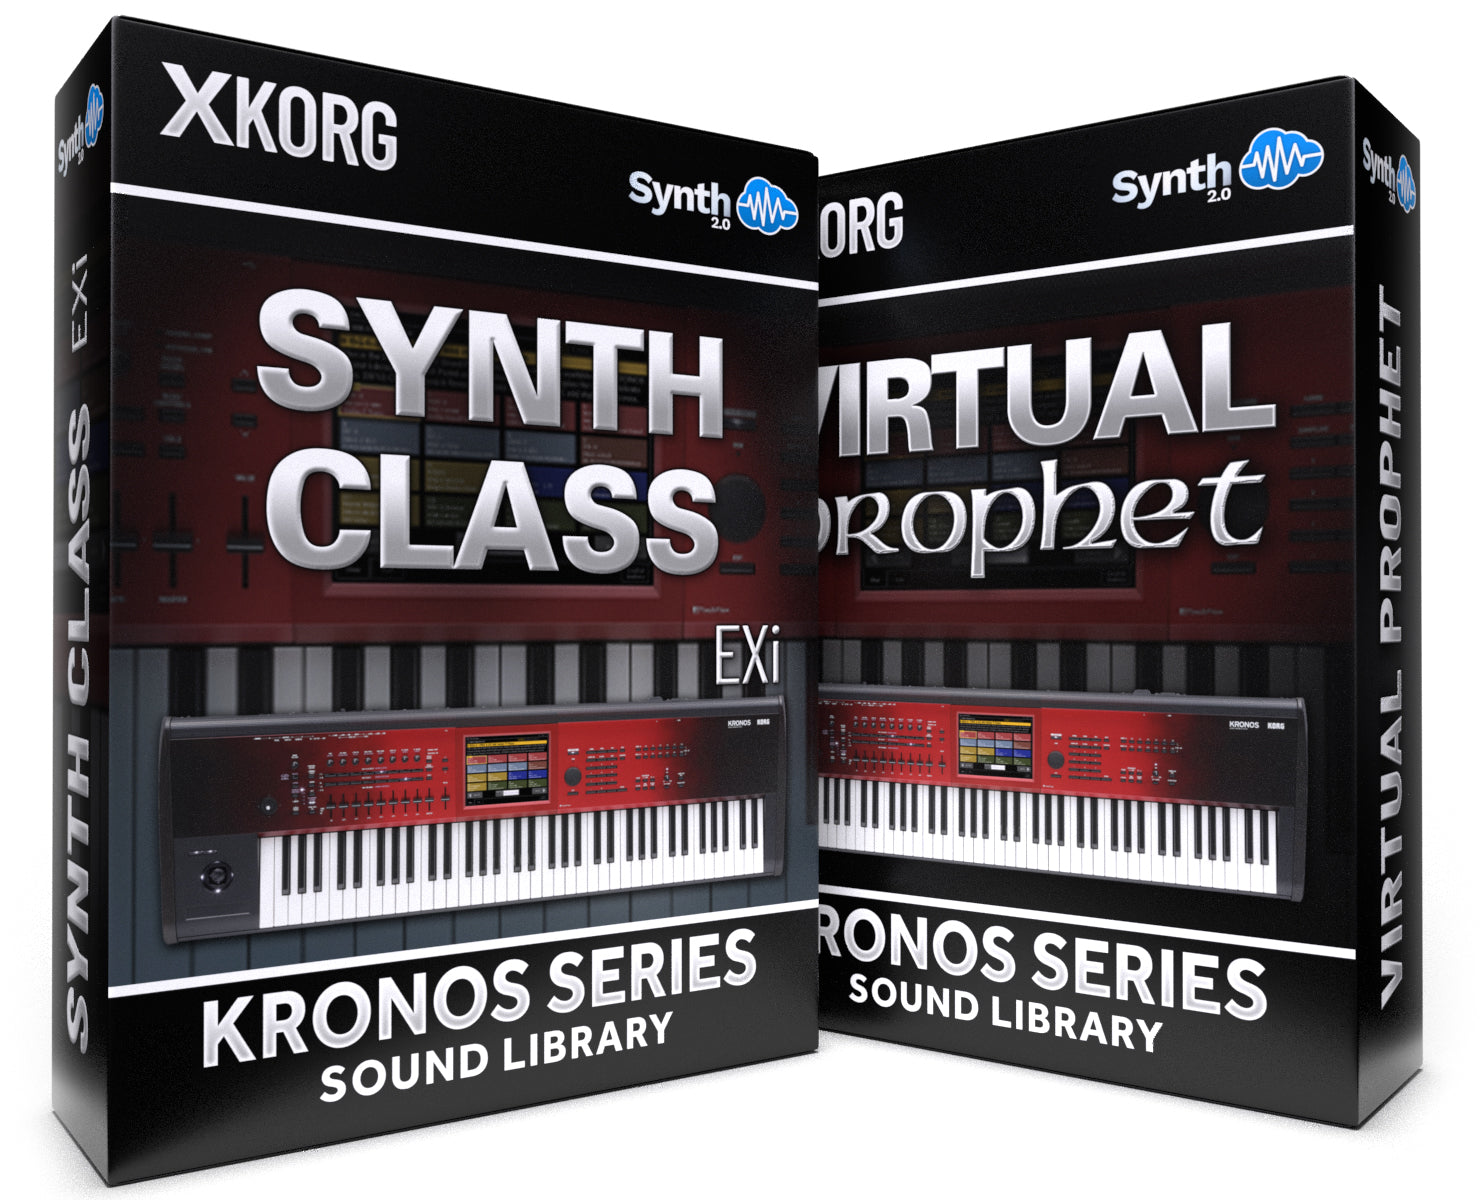 SSX142 - ( Bundle ) - Synth Class EXi + Virtual Prophet - Korg Kronos Series